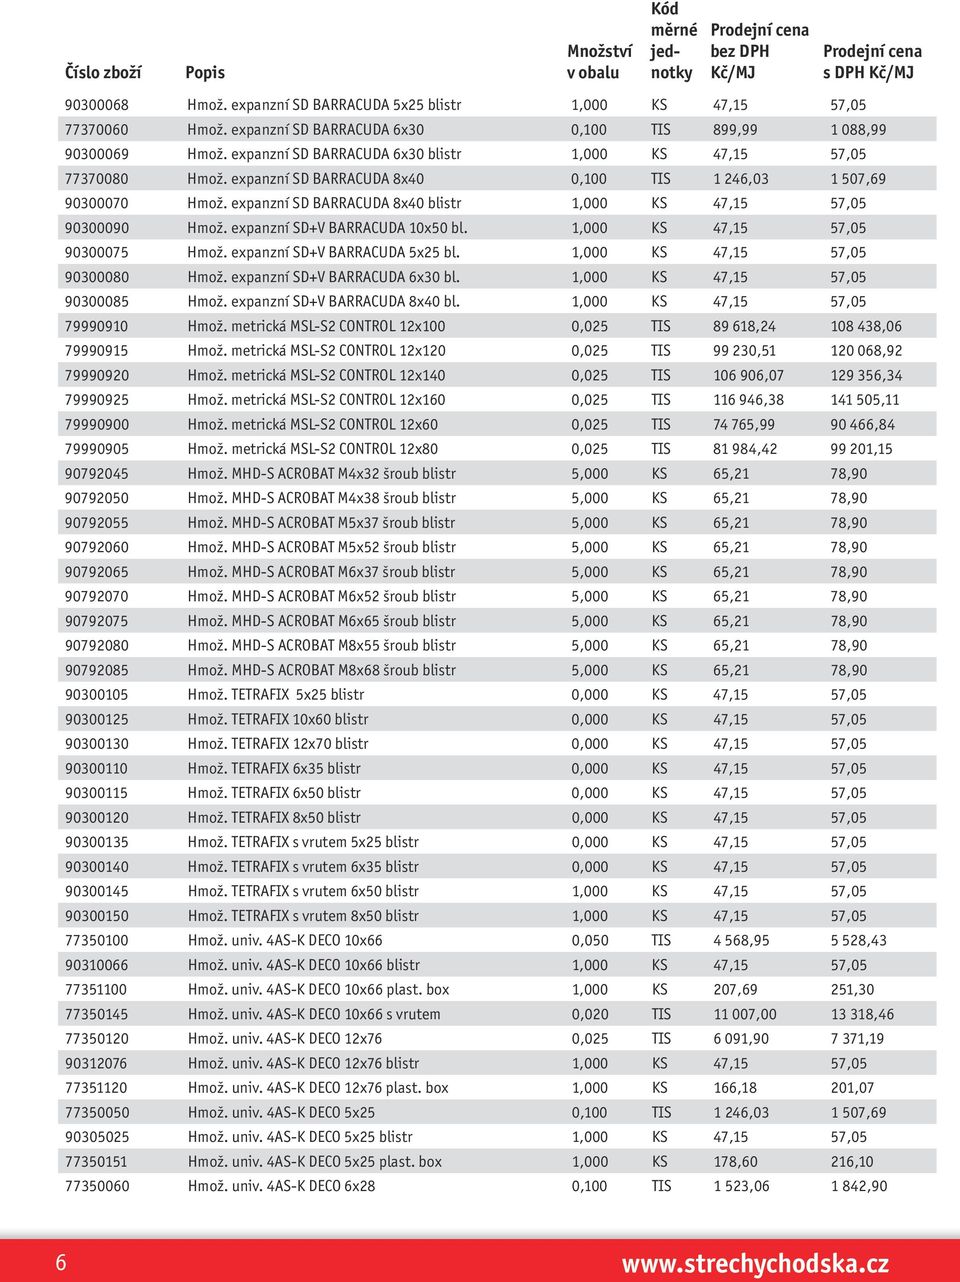 expanzní SD BARRACUDA 8x40 blistr 1,000 KS 47,15 57,05 90300090 Hmož. expanzní SD+V BARRACUDA 10x50 bl. 1,000 KS 47,15 57,05 90300075 Hmož. expanzní SD+V BARRACUDA 5x25 bl.